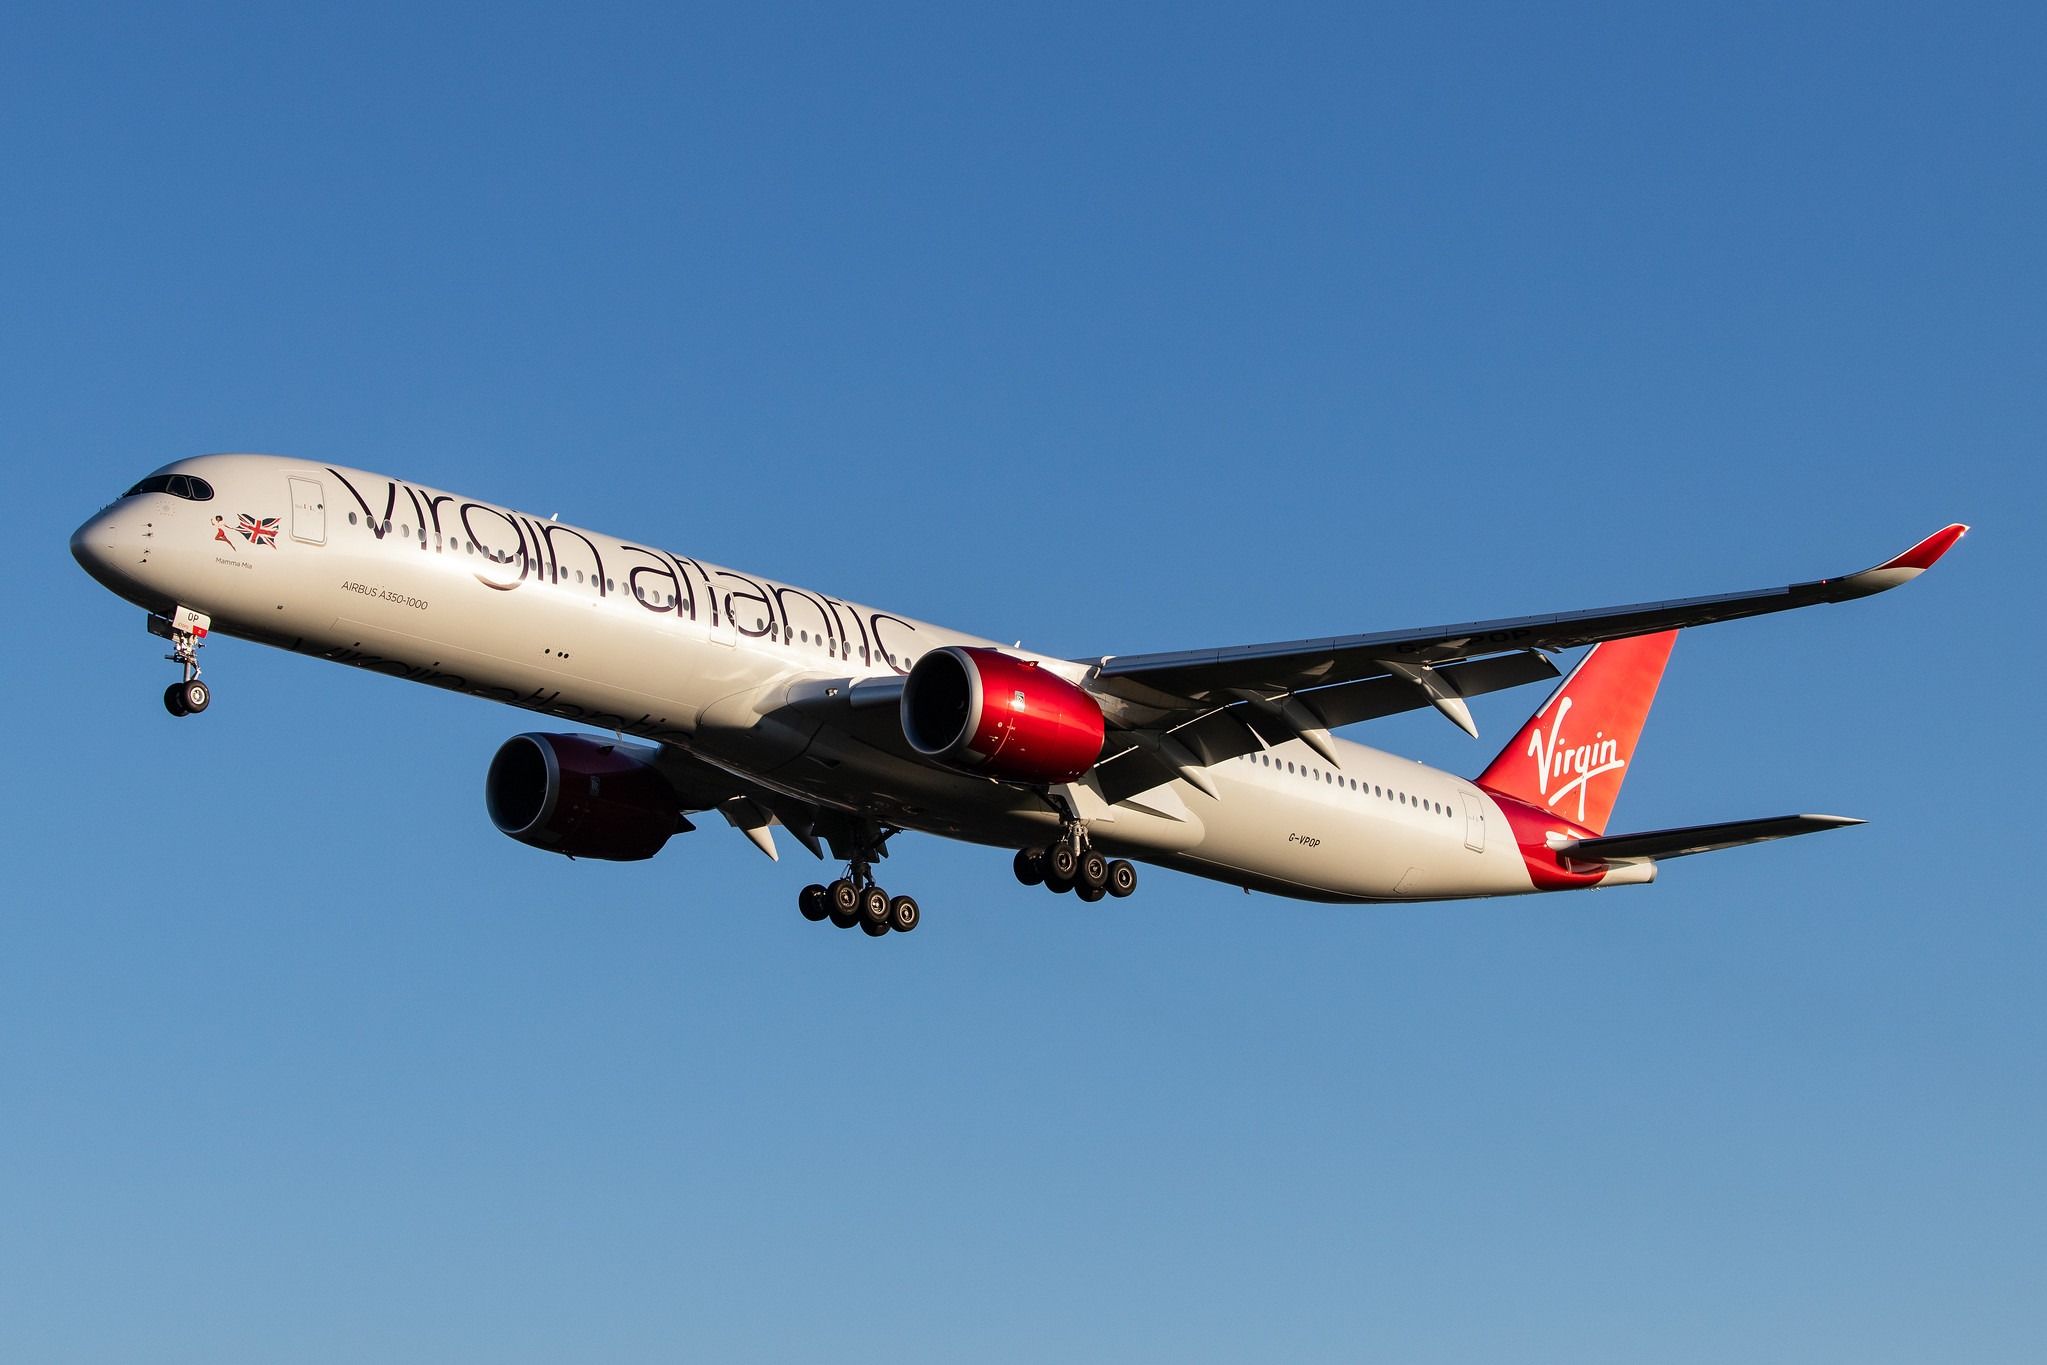  Virgin Atlantic (VS / VIR) | Airbus A350-1041 A35K | G-VPOP